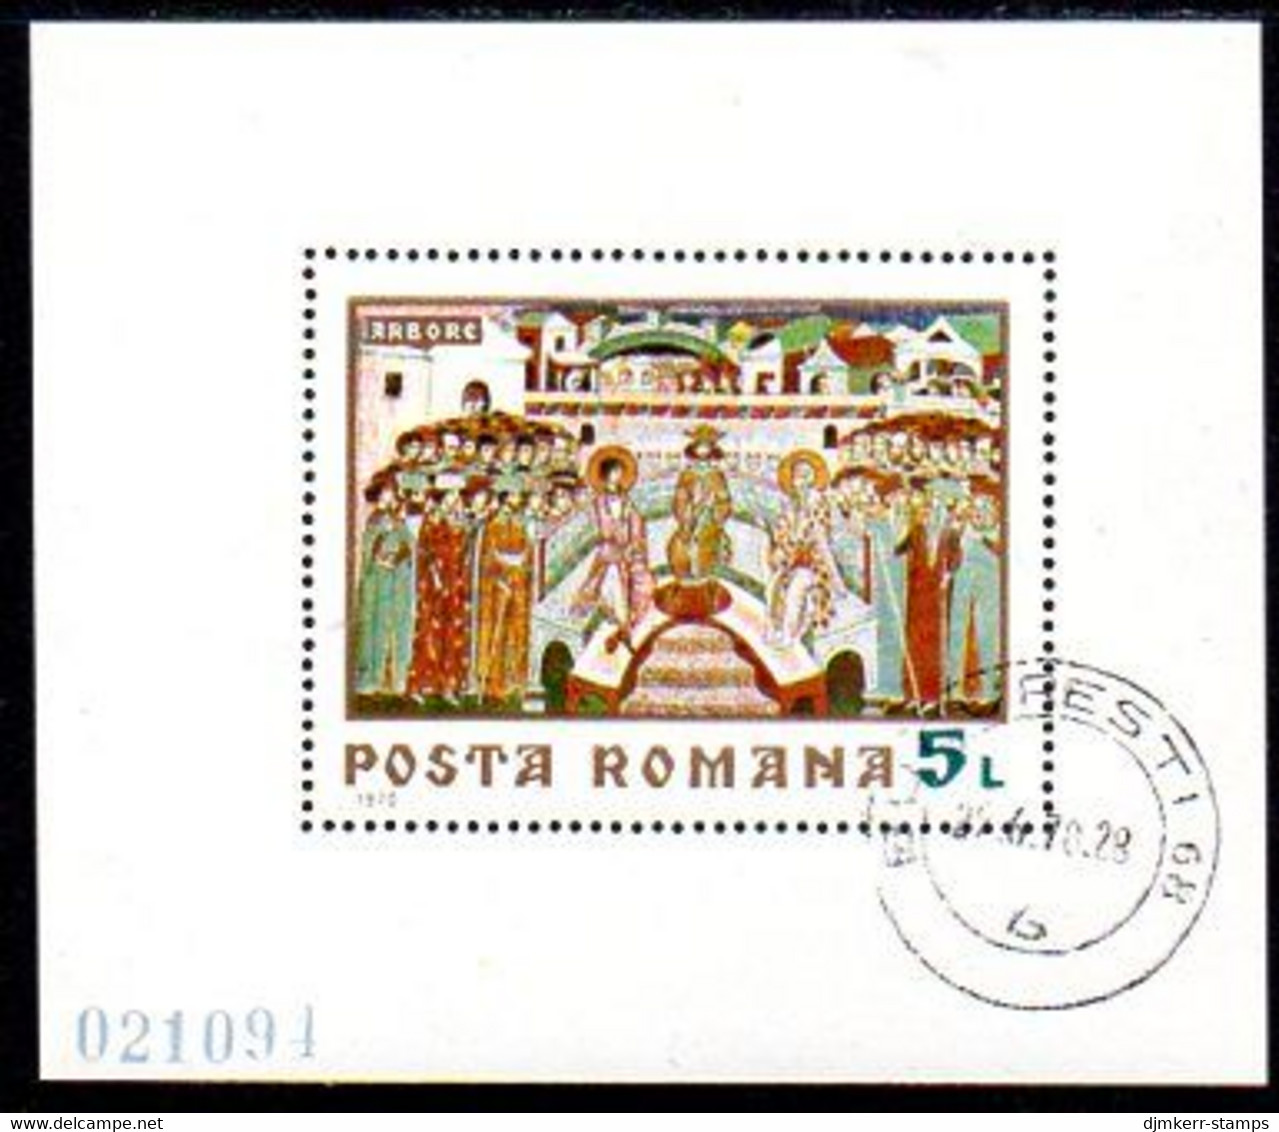 ROMANIA 1970 Monastery Frescoes Block Used.  Michel Block 76 - Used Stamps